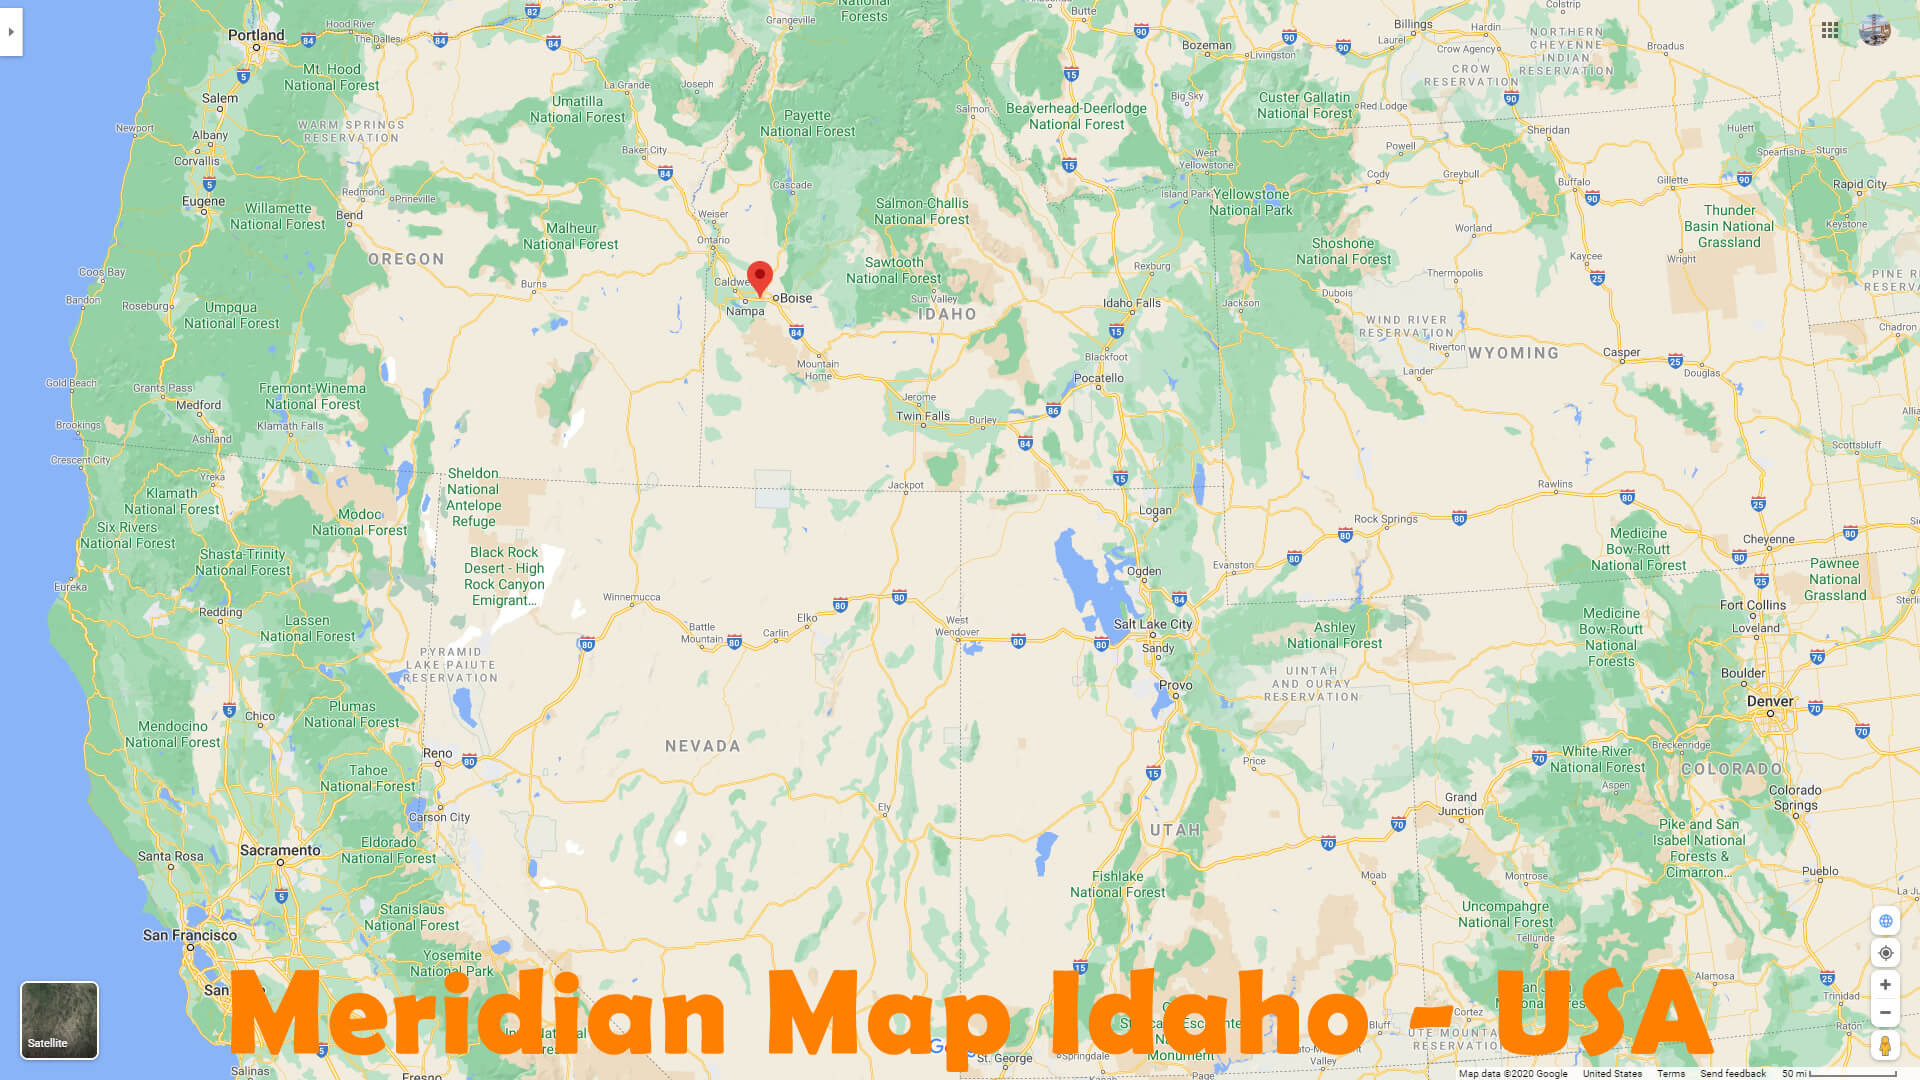 Meridian Map Idaho   USA